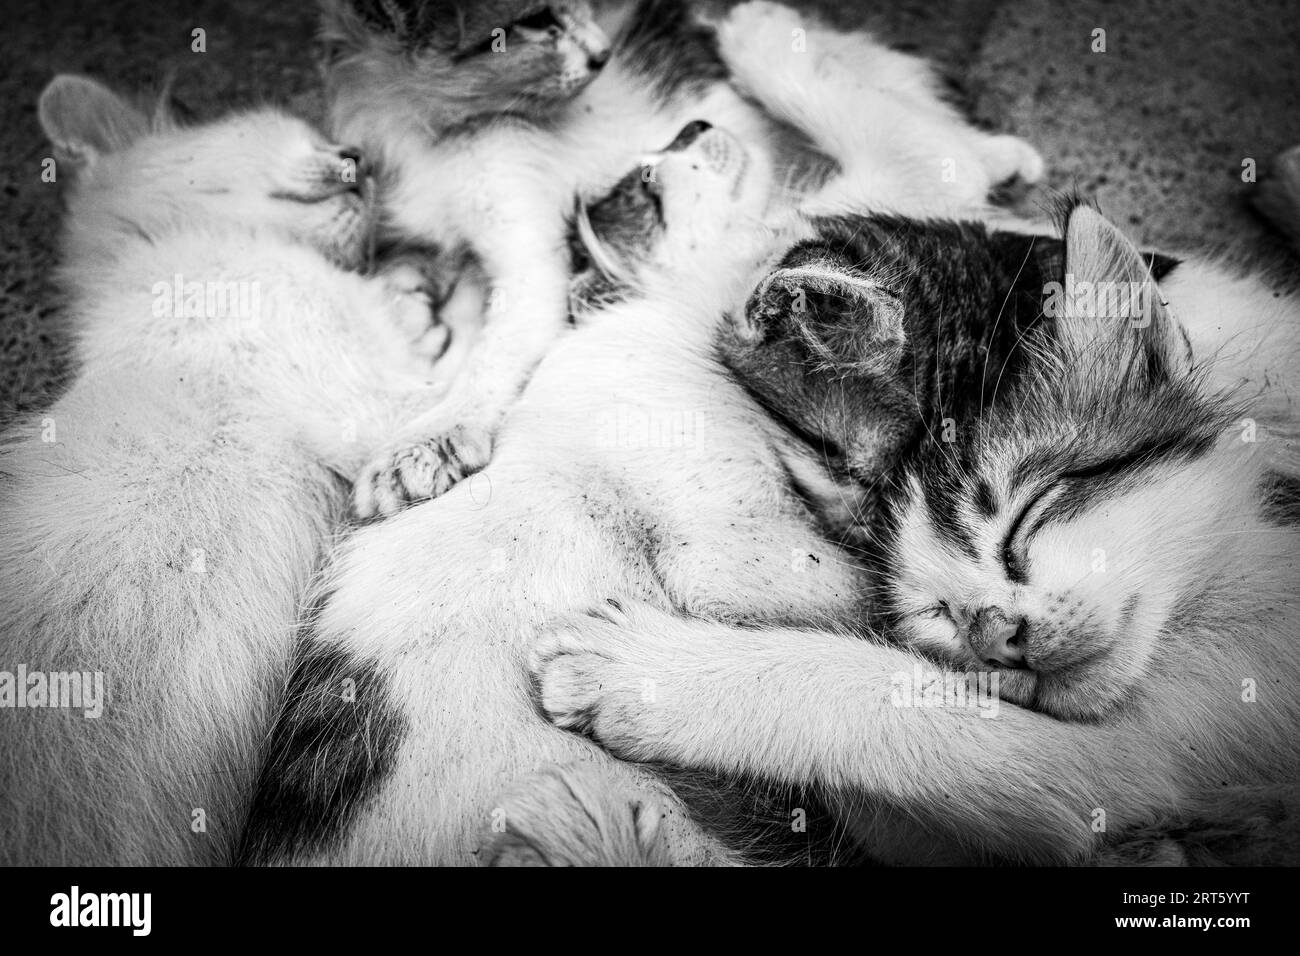 Cute little black and white kitten sleeping Cats Stock Photo